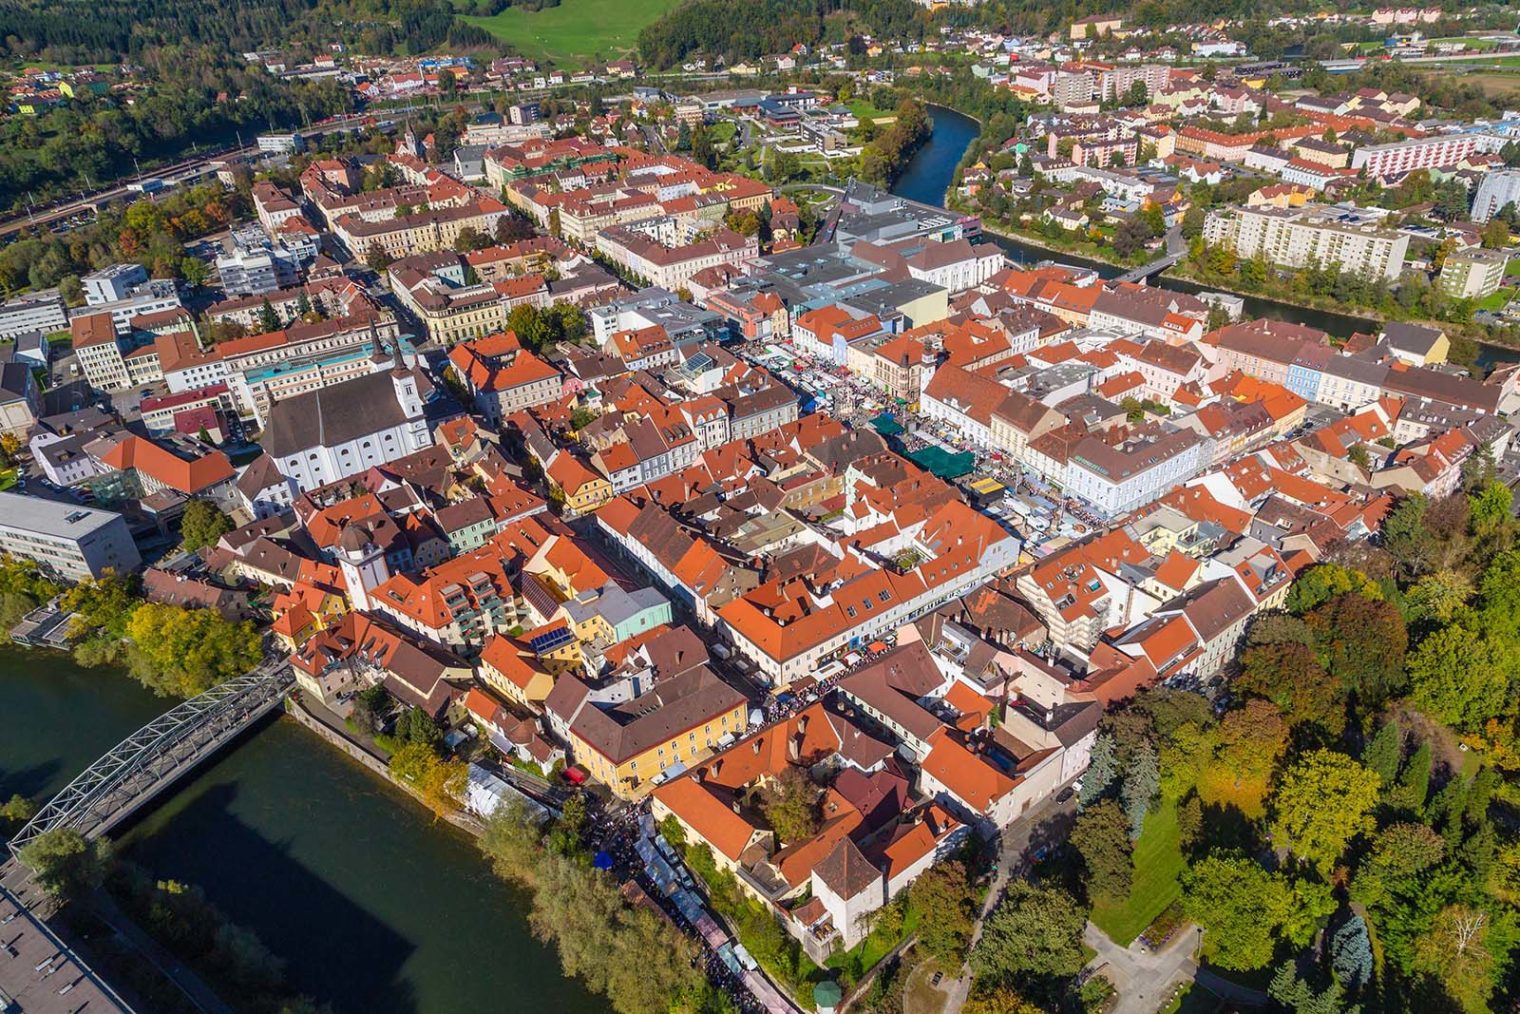 Aerial shot of Leoben: main square